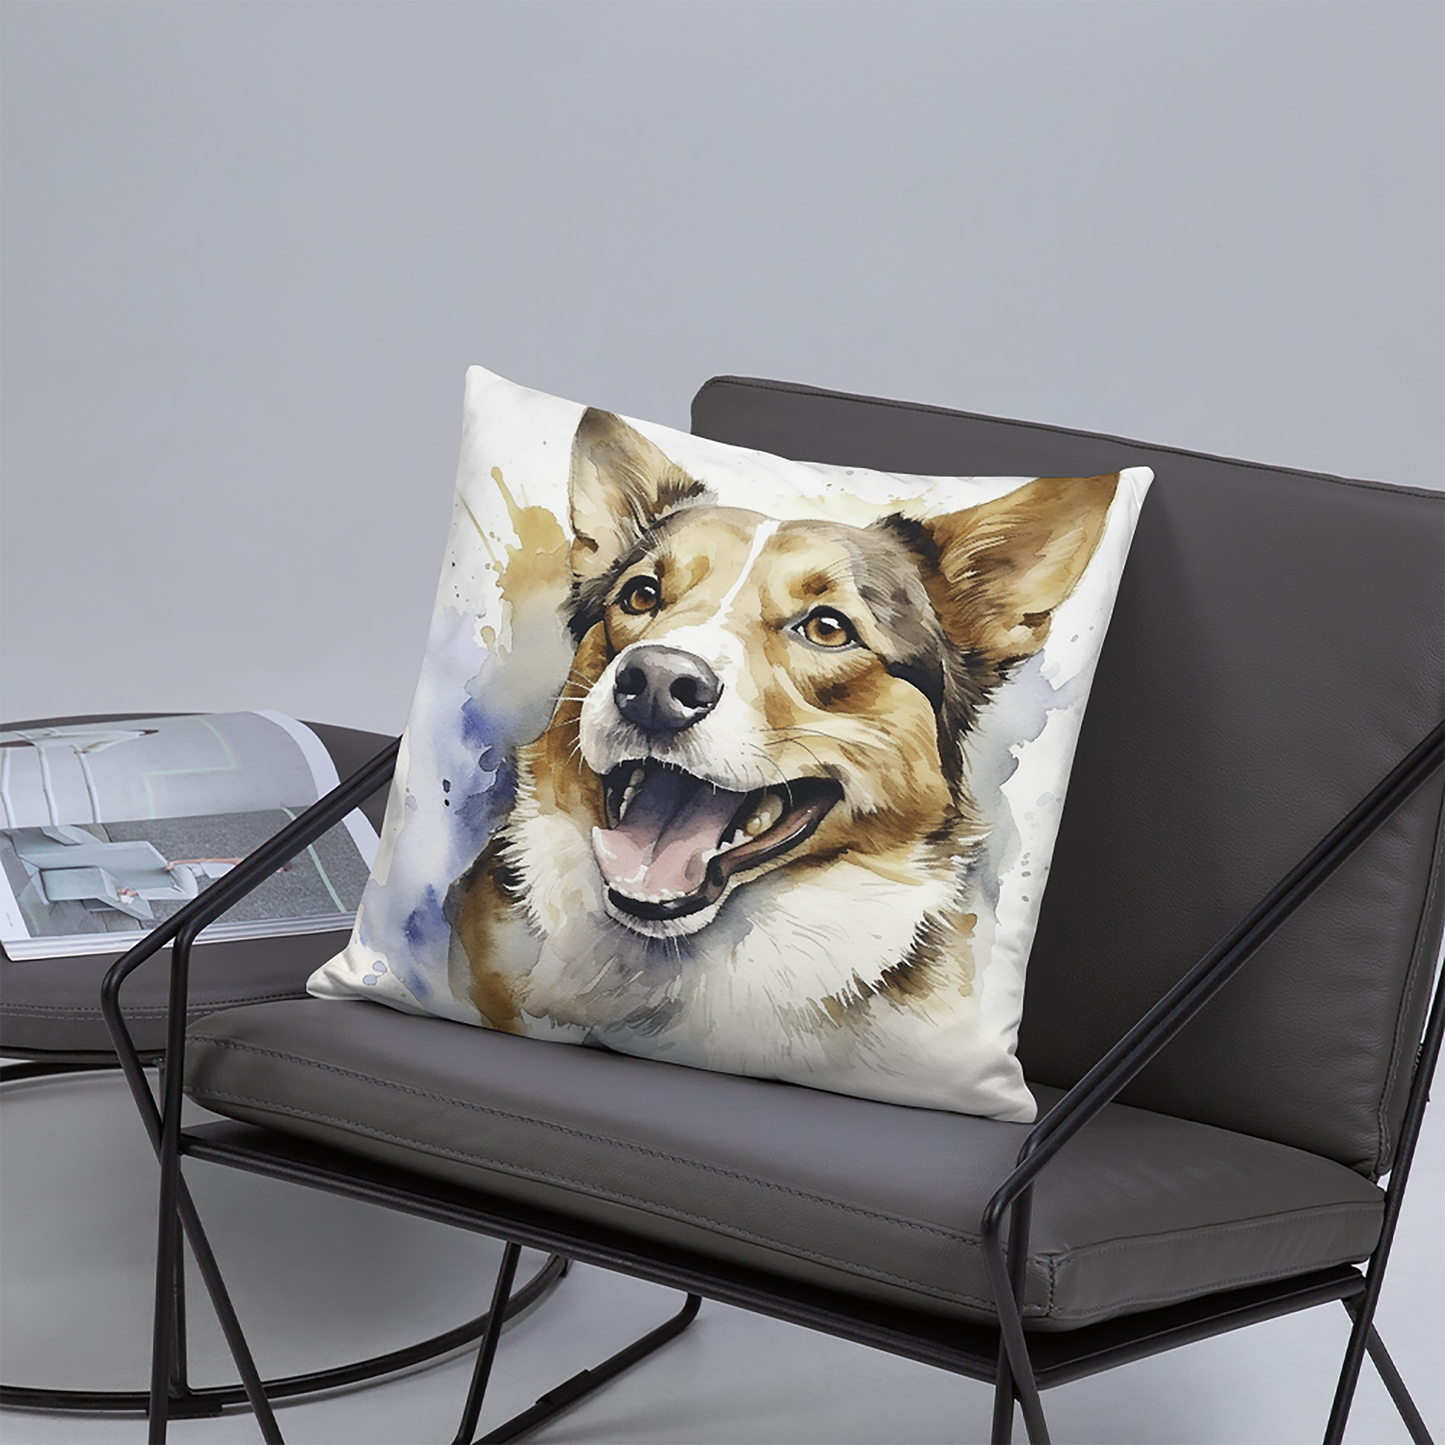 Dog Throw Pillow Playful Corgi Watercolor Illustration Polyester Decorative Cushion 18x18